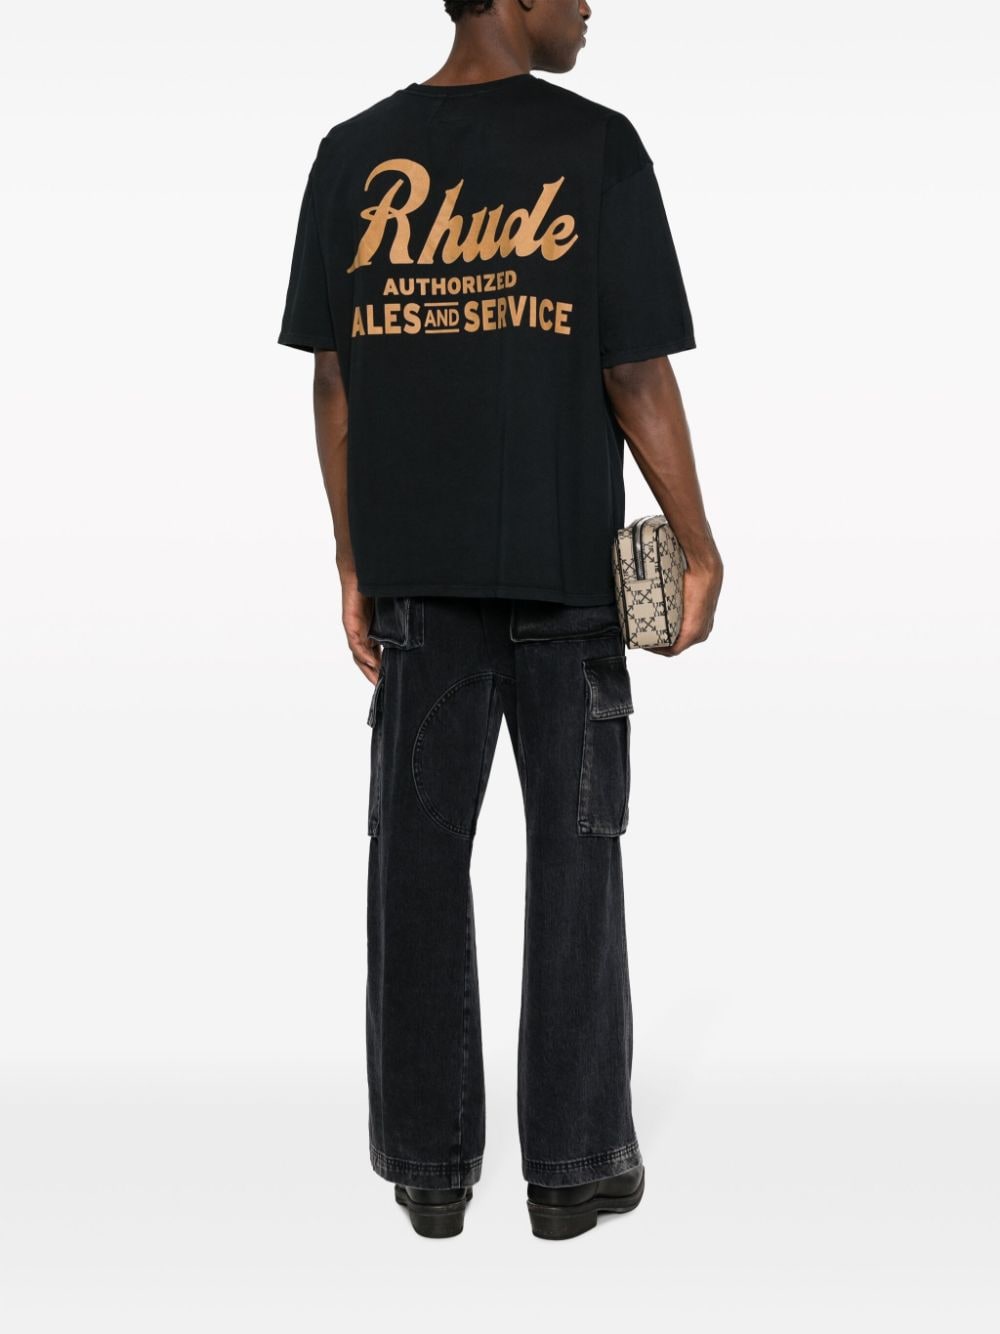 Rhude T-shirt 'Ales & Service' - Lothaire